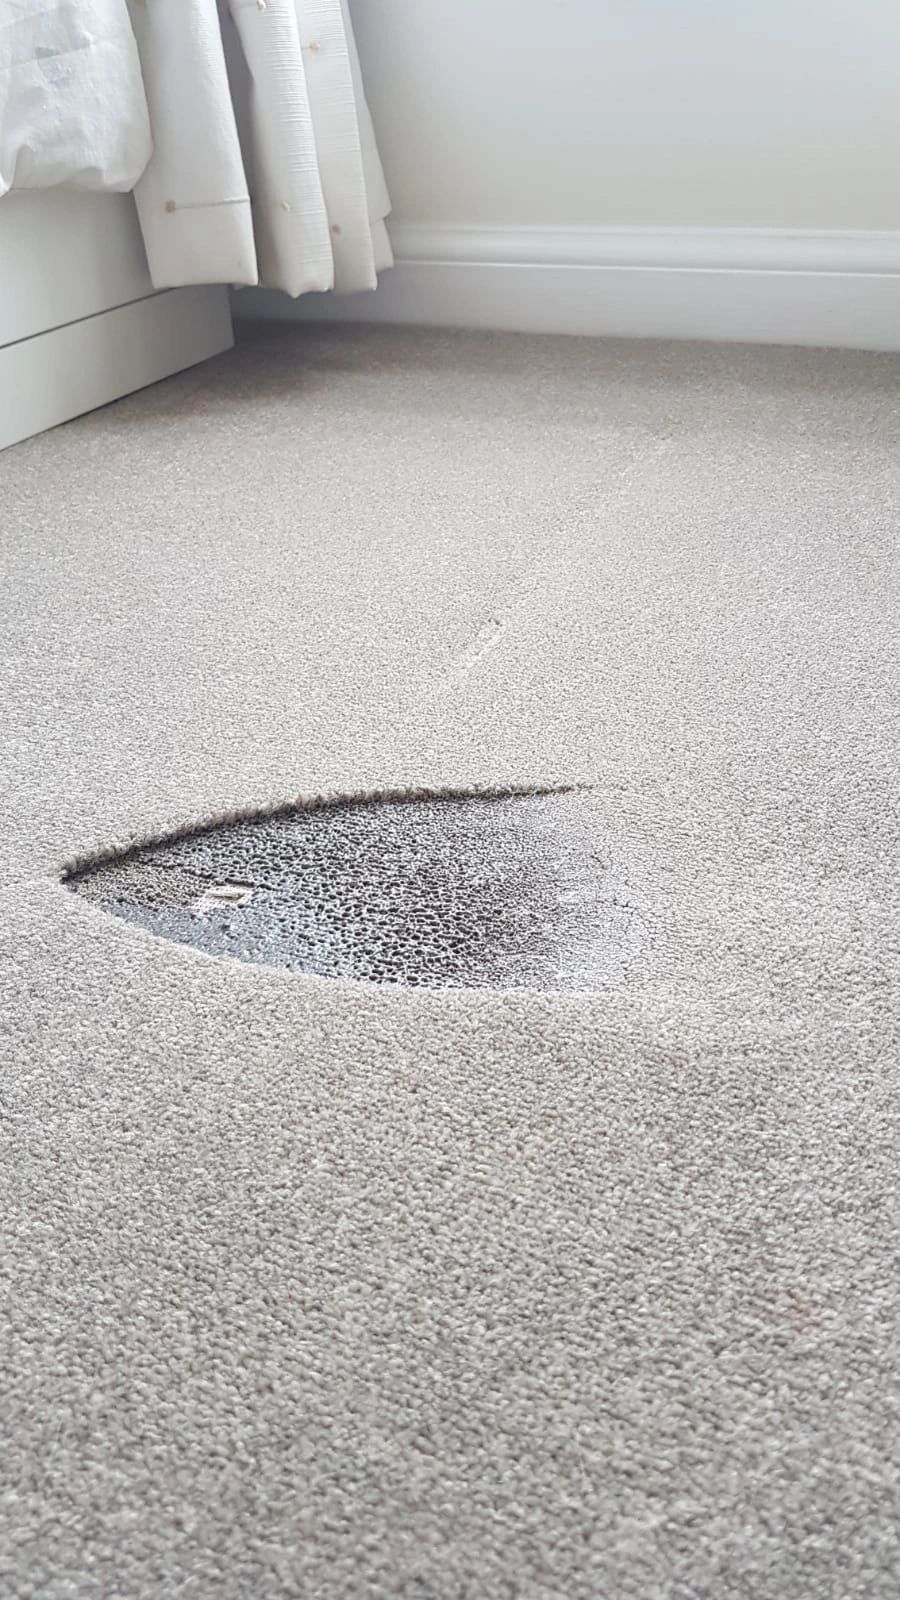 Carpet Repair Services - Holes, Rips, Tears & Burns